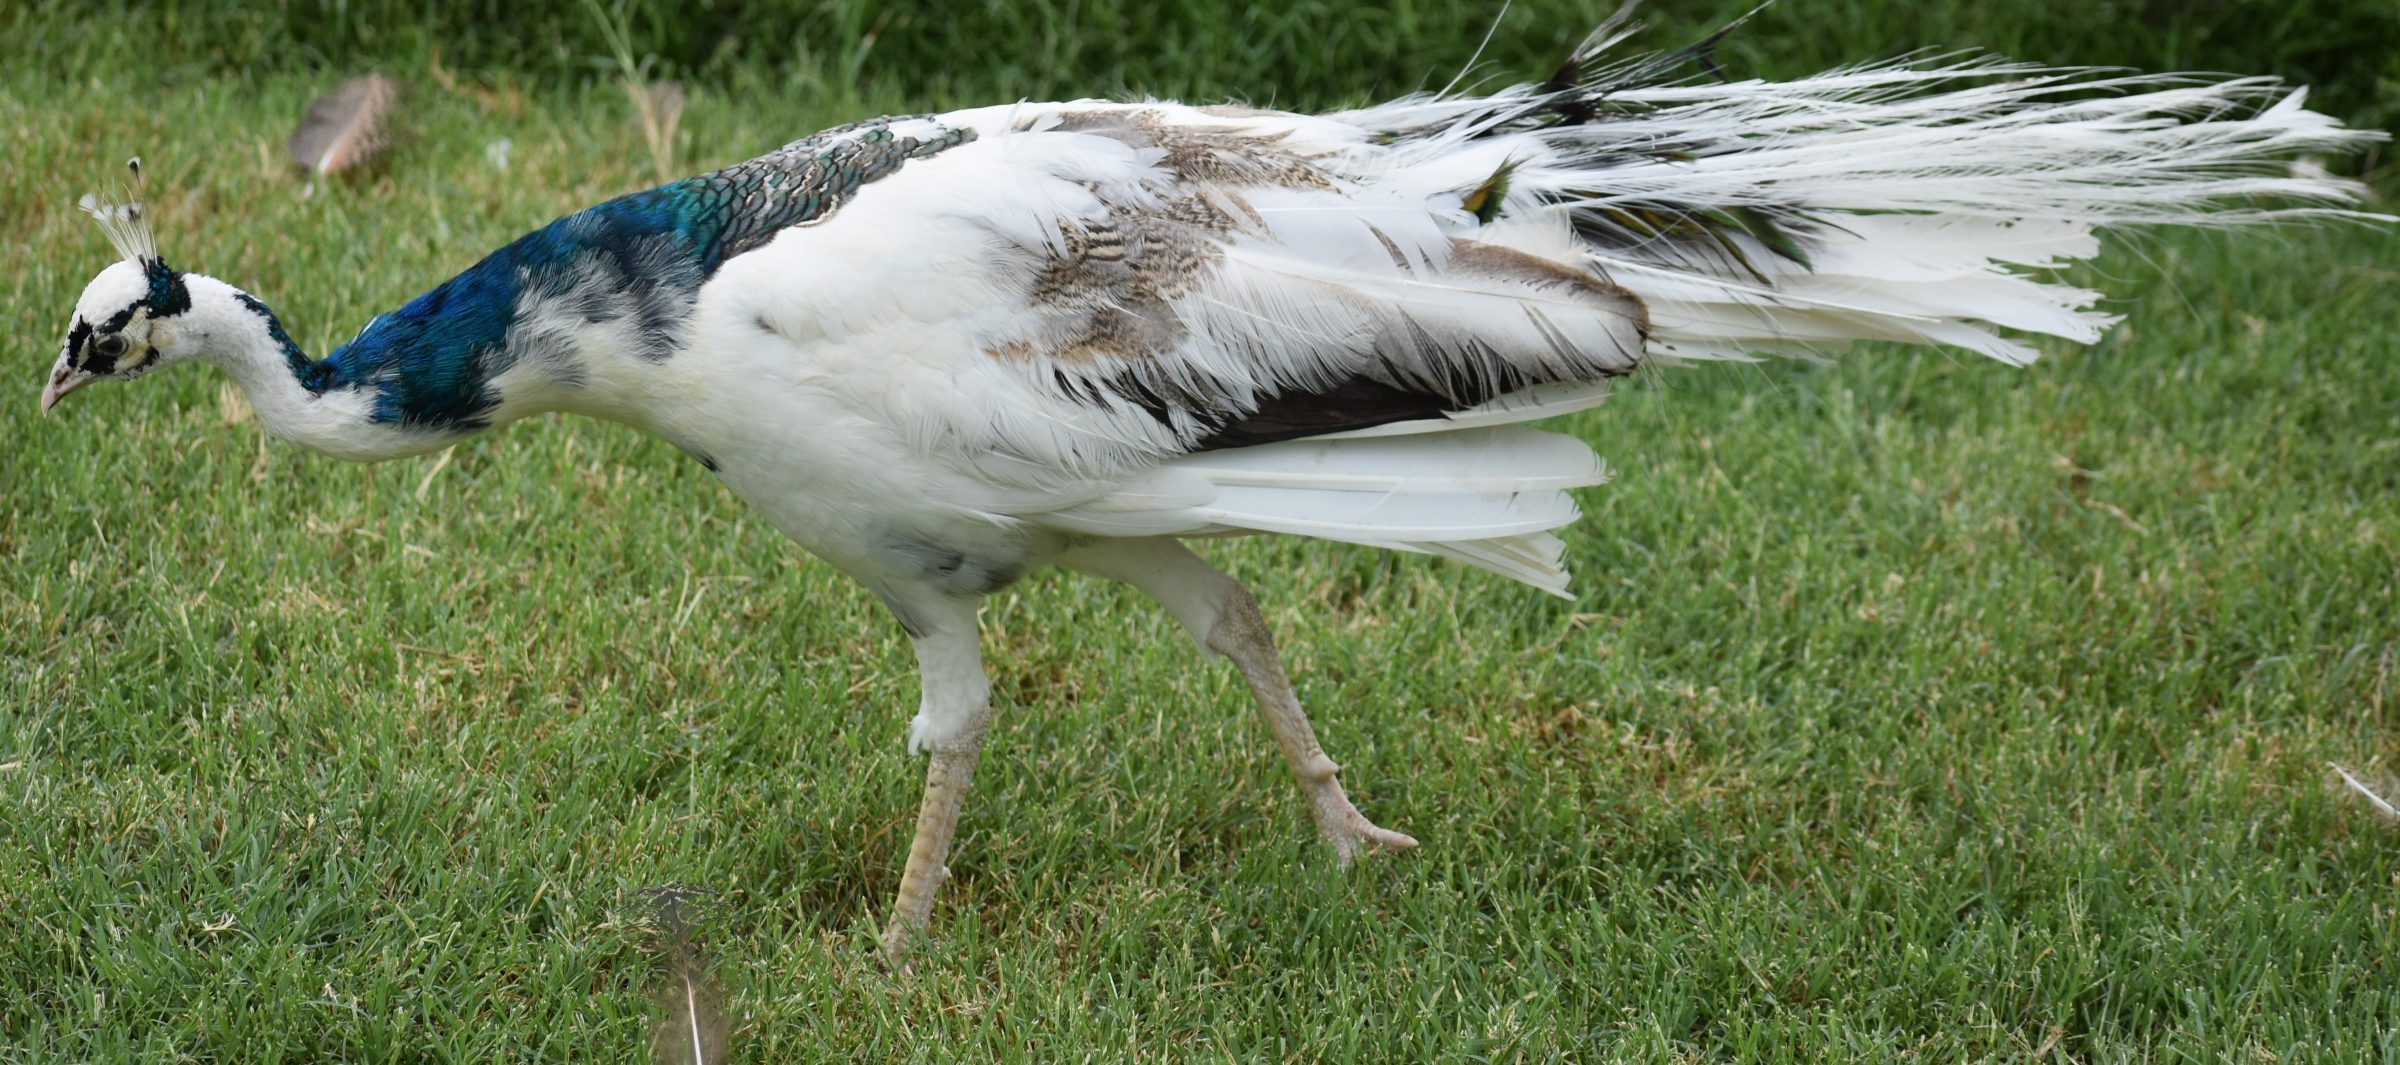 Piebald peacock.